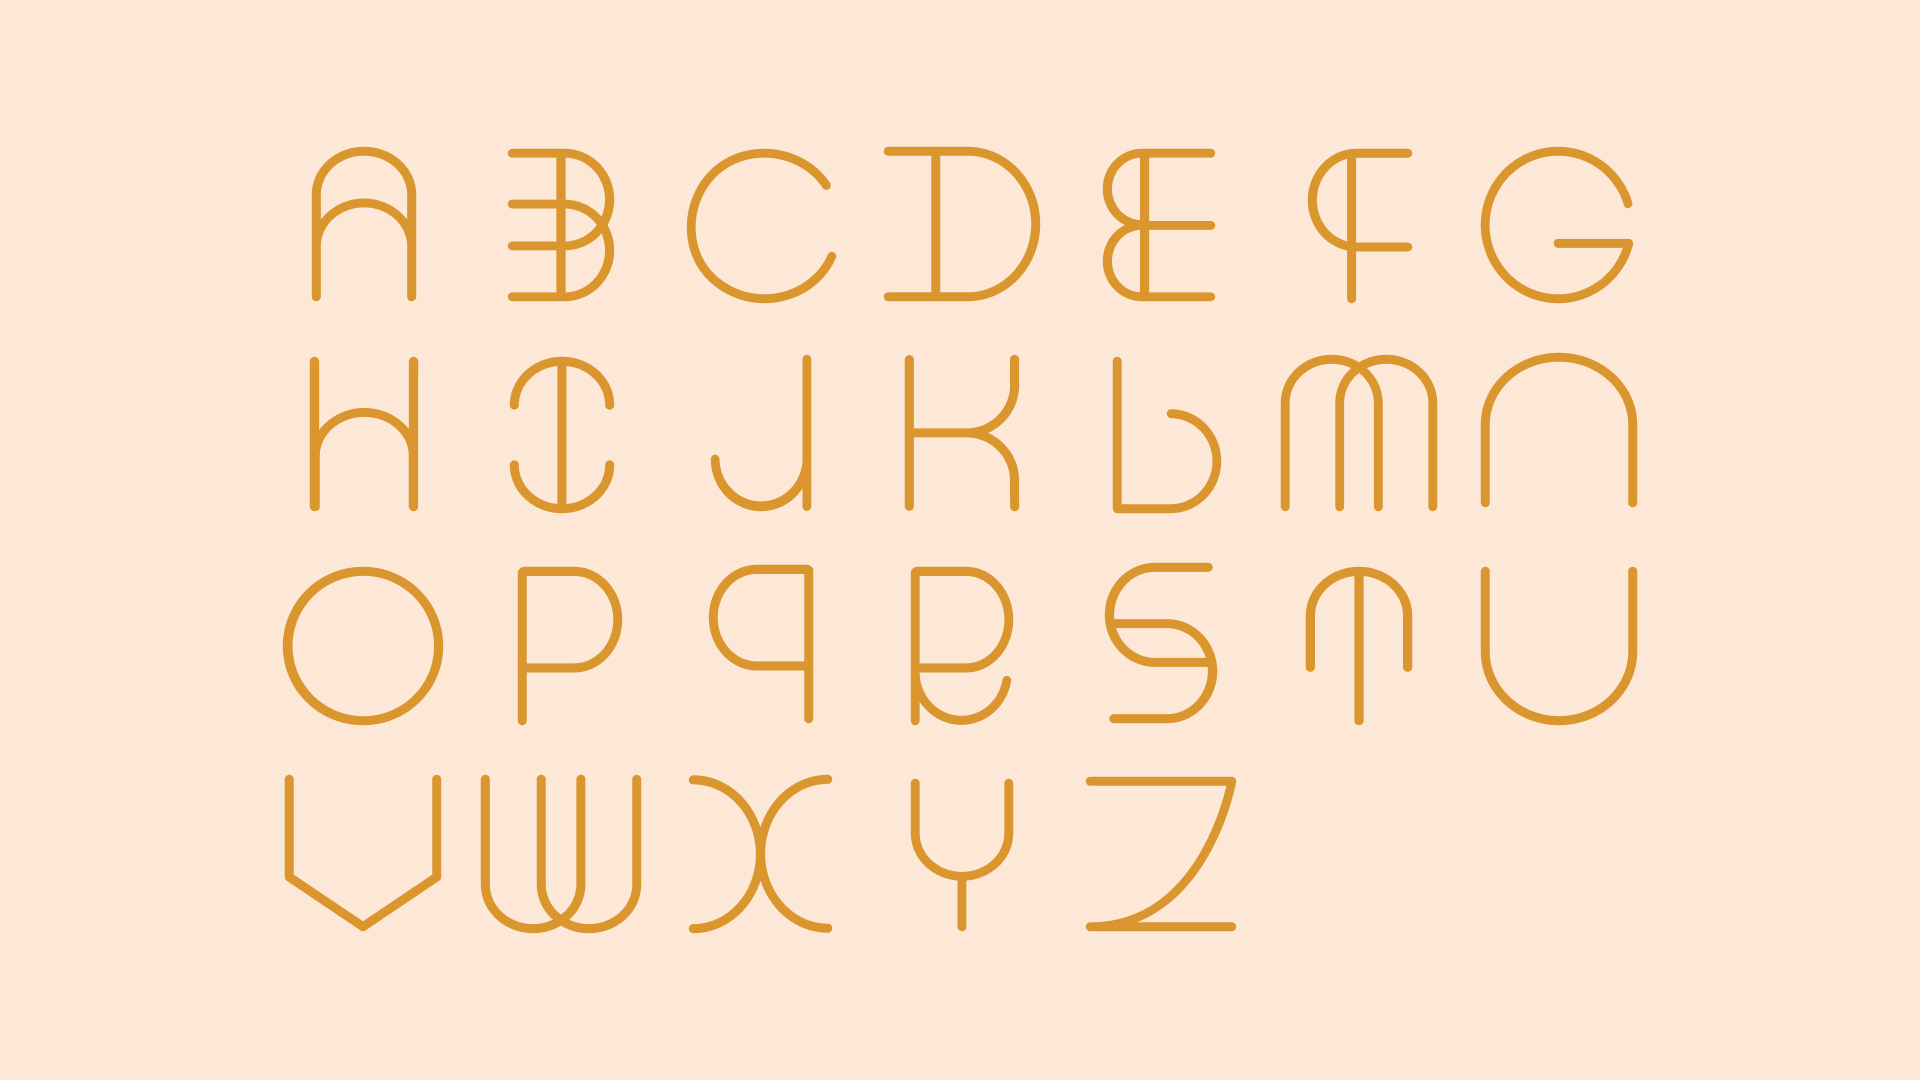 Typeface I designed for the identity